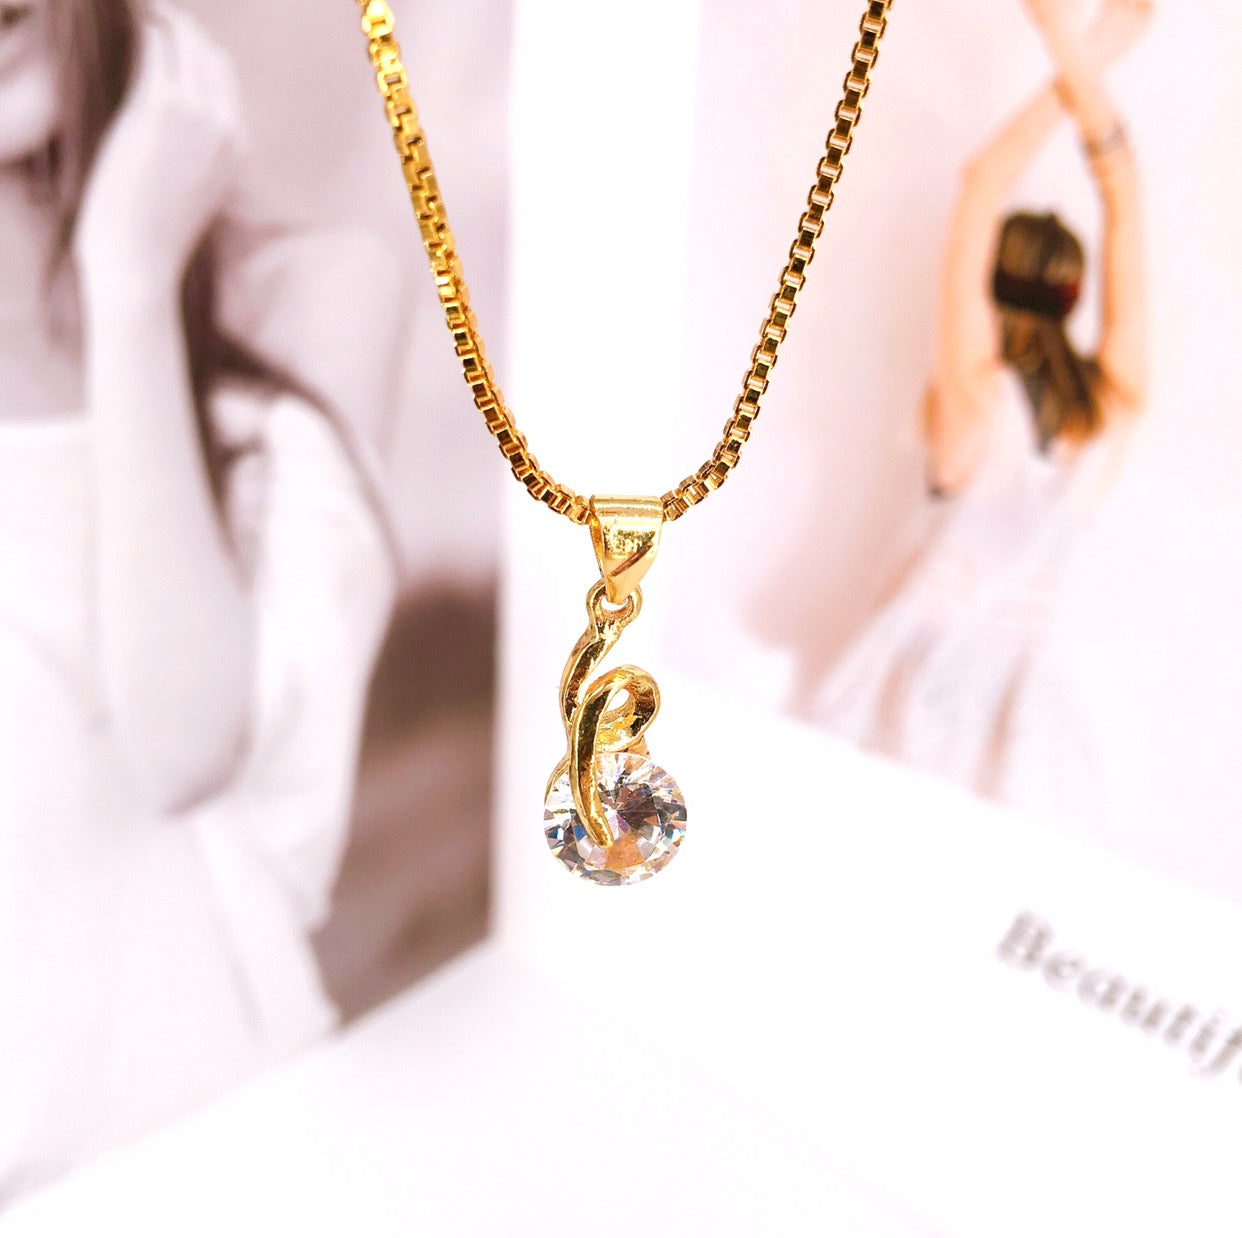 24K Bangkok Gold Plated Manmade Diamond Pendant Necklace